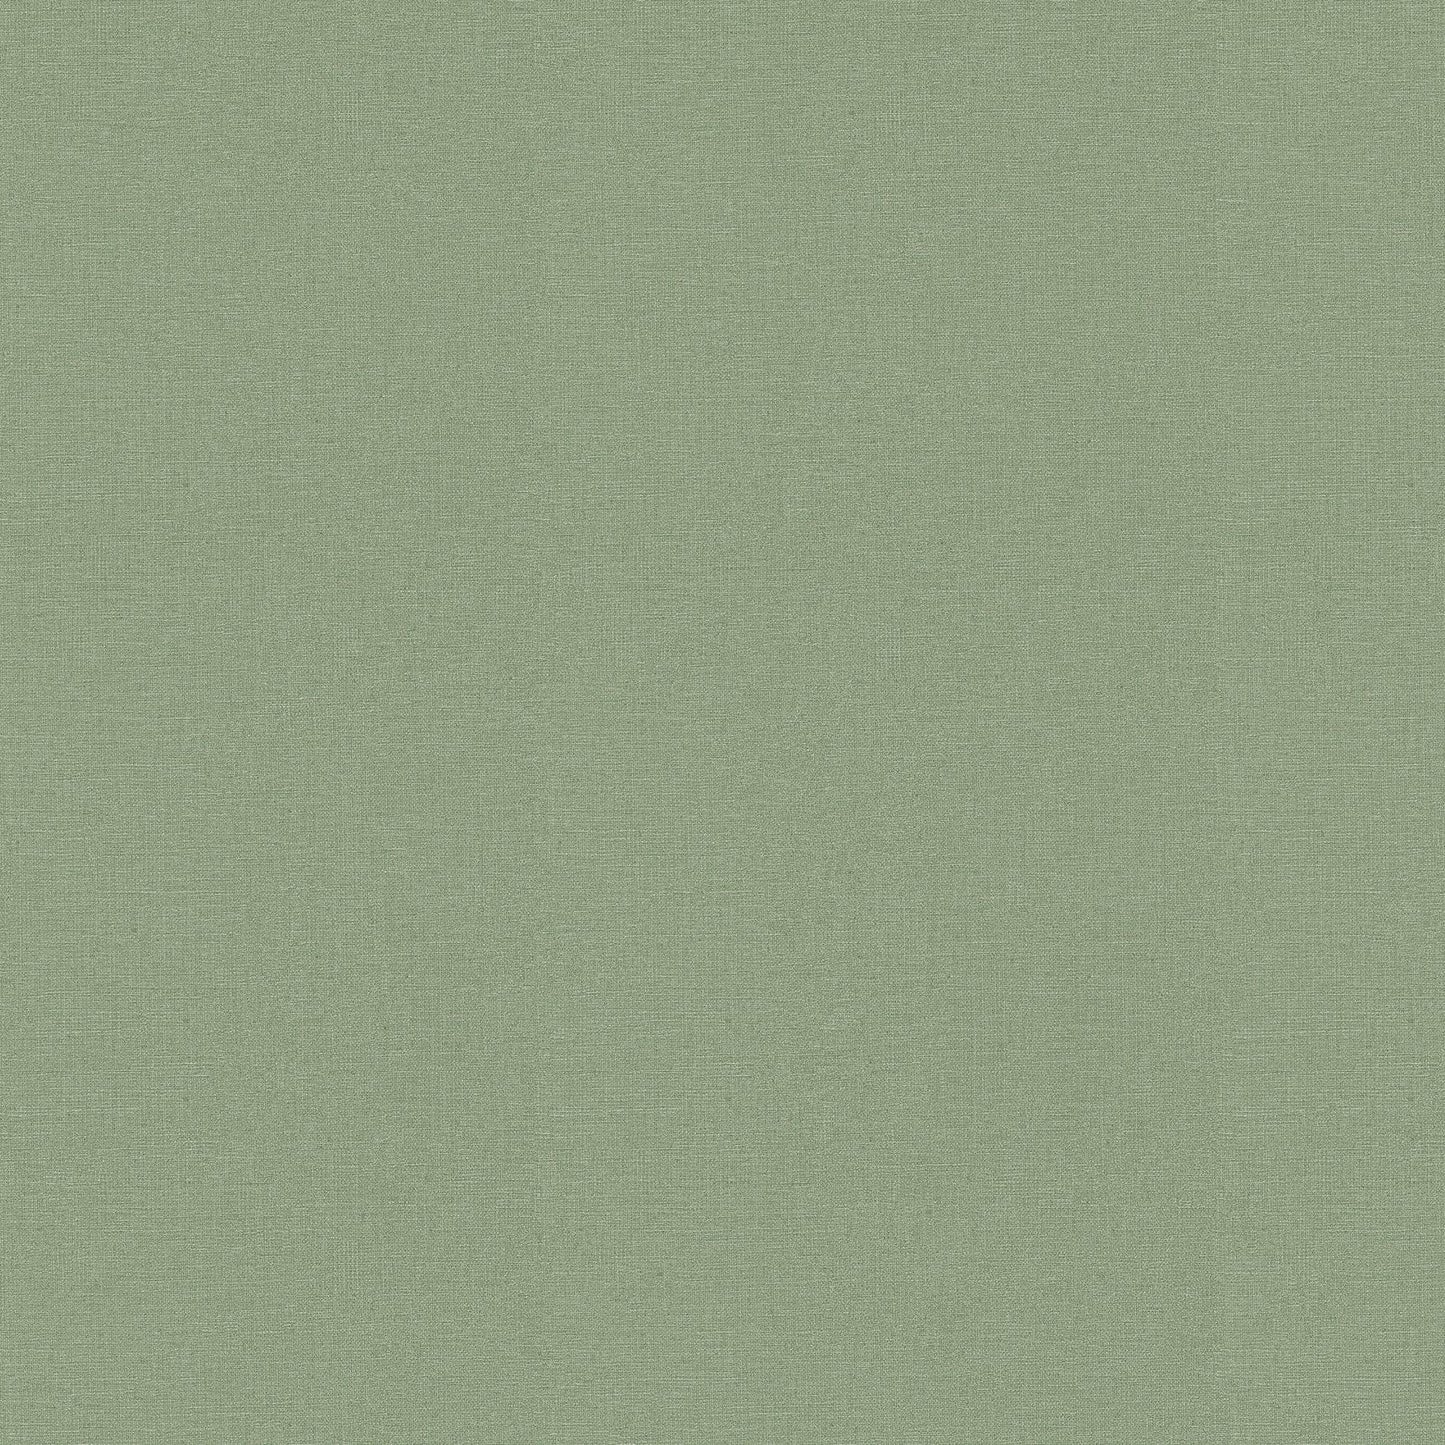 Buy 2971-86313 Dimensions Meade Green Fine Weave Green A-Street Prints Wallpaper